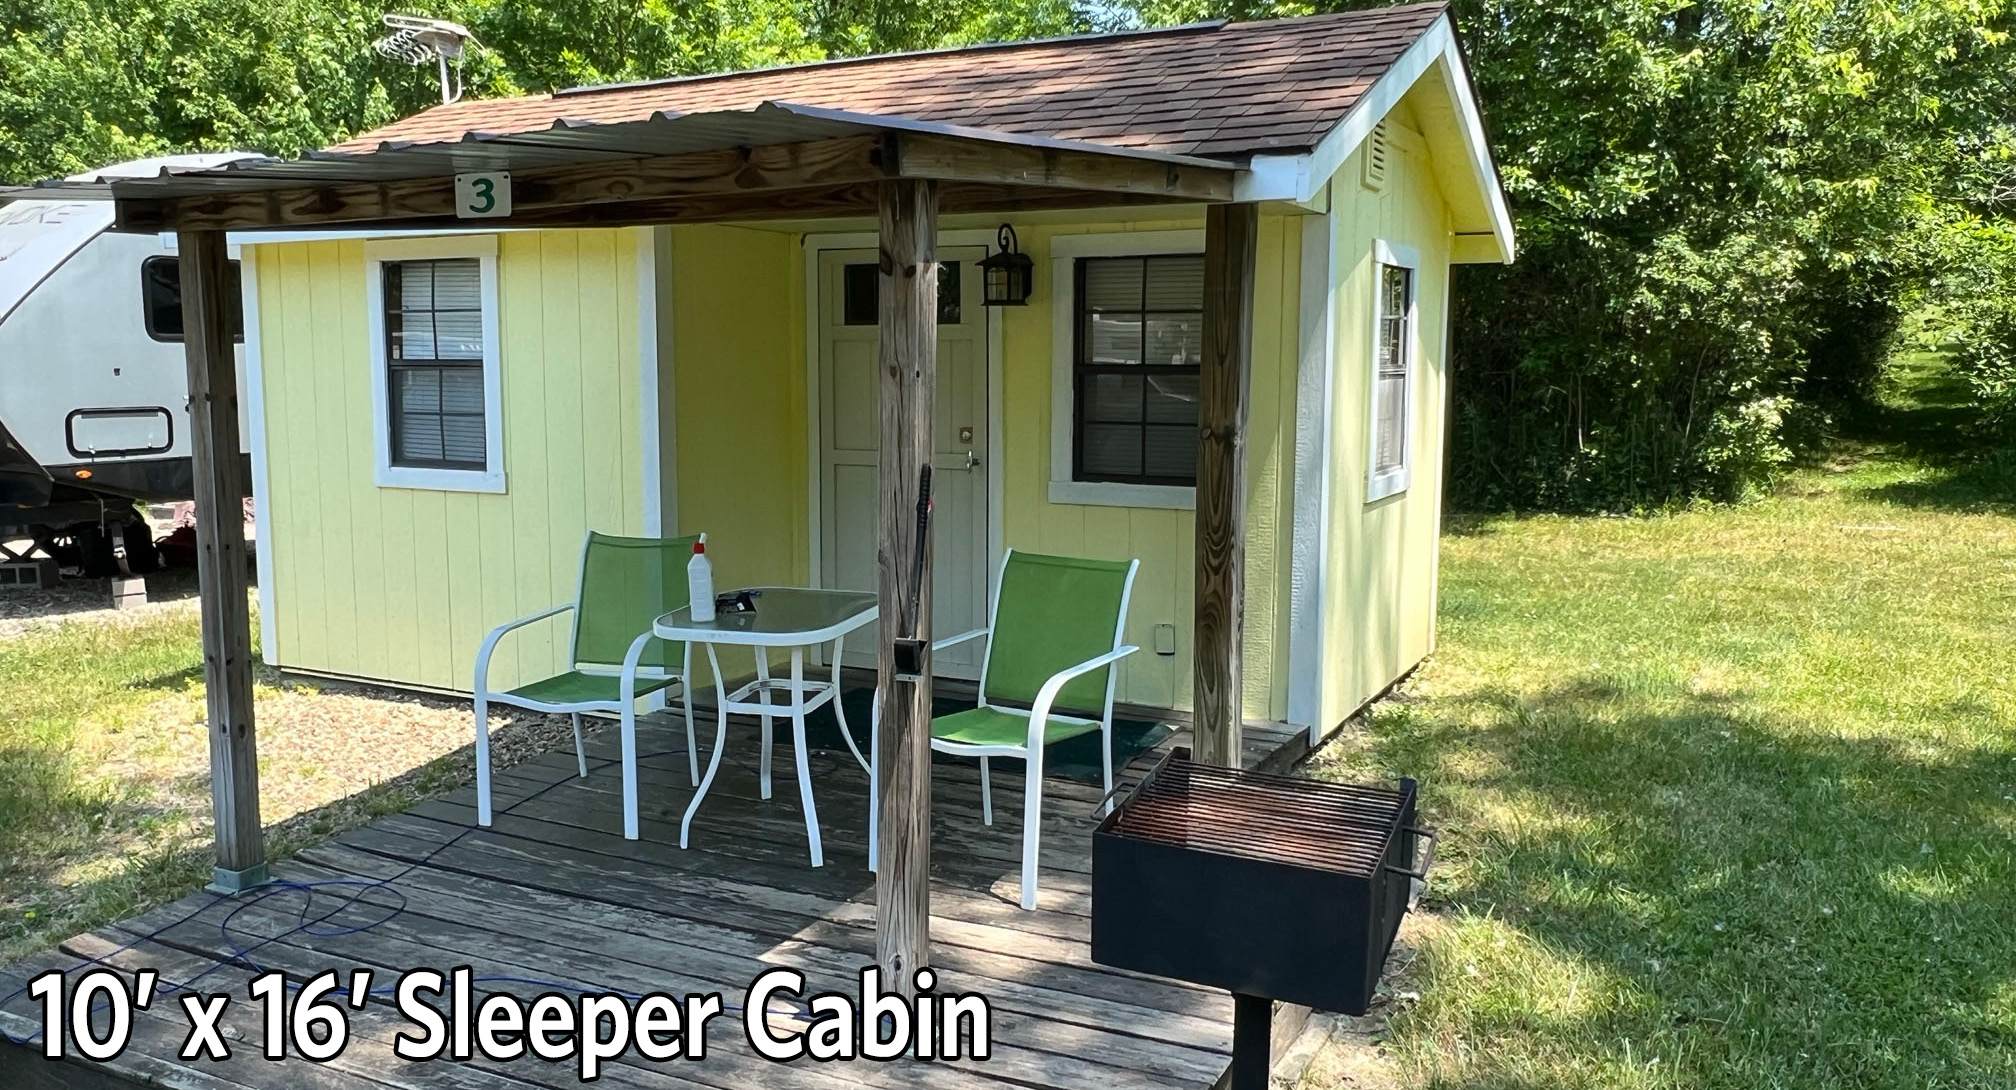 10' x 16' Sleeper Cabins exterior view